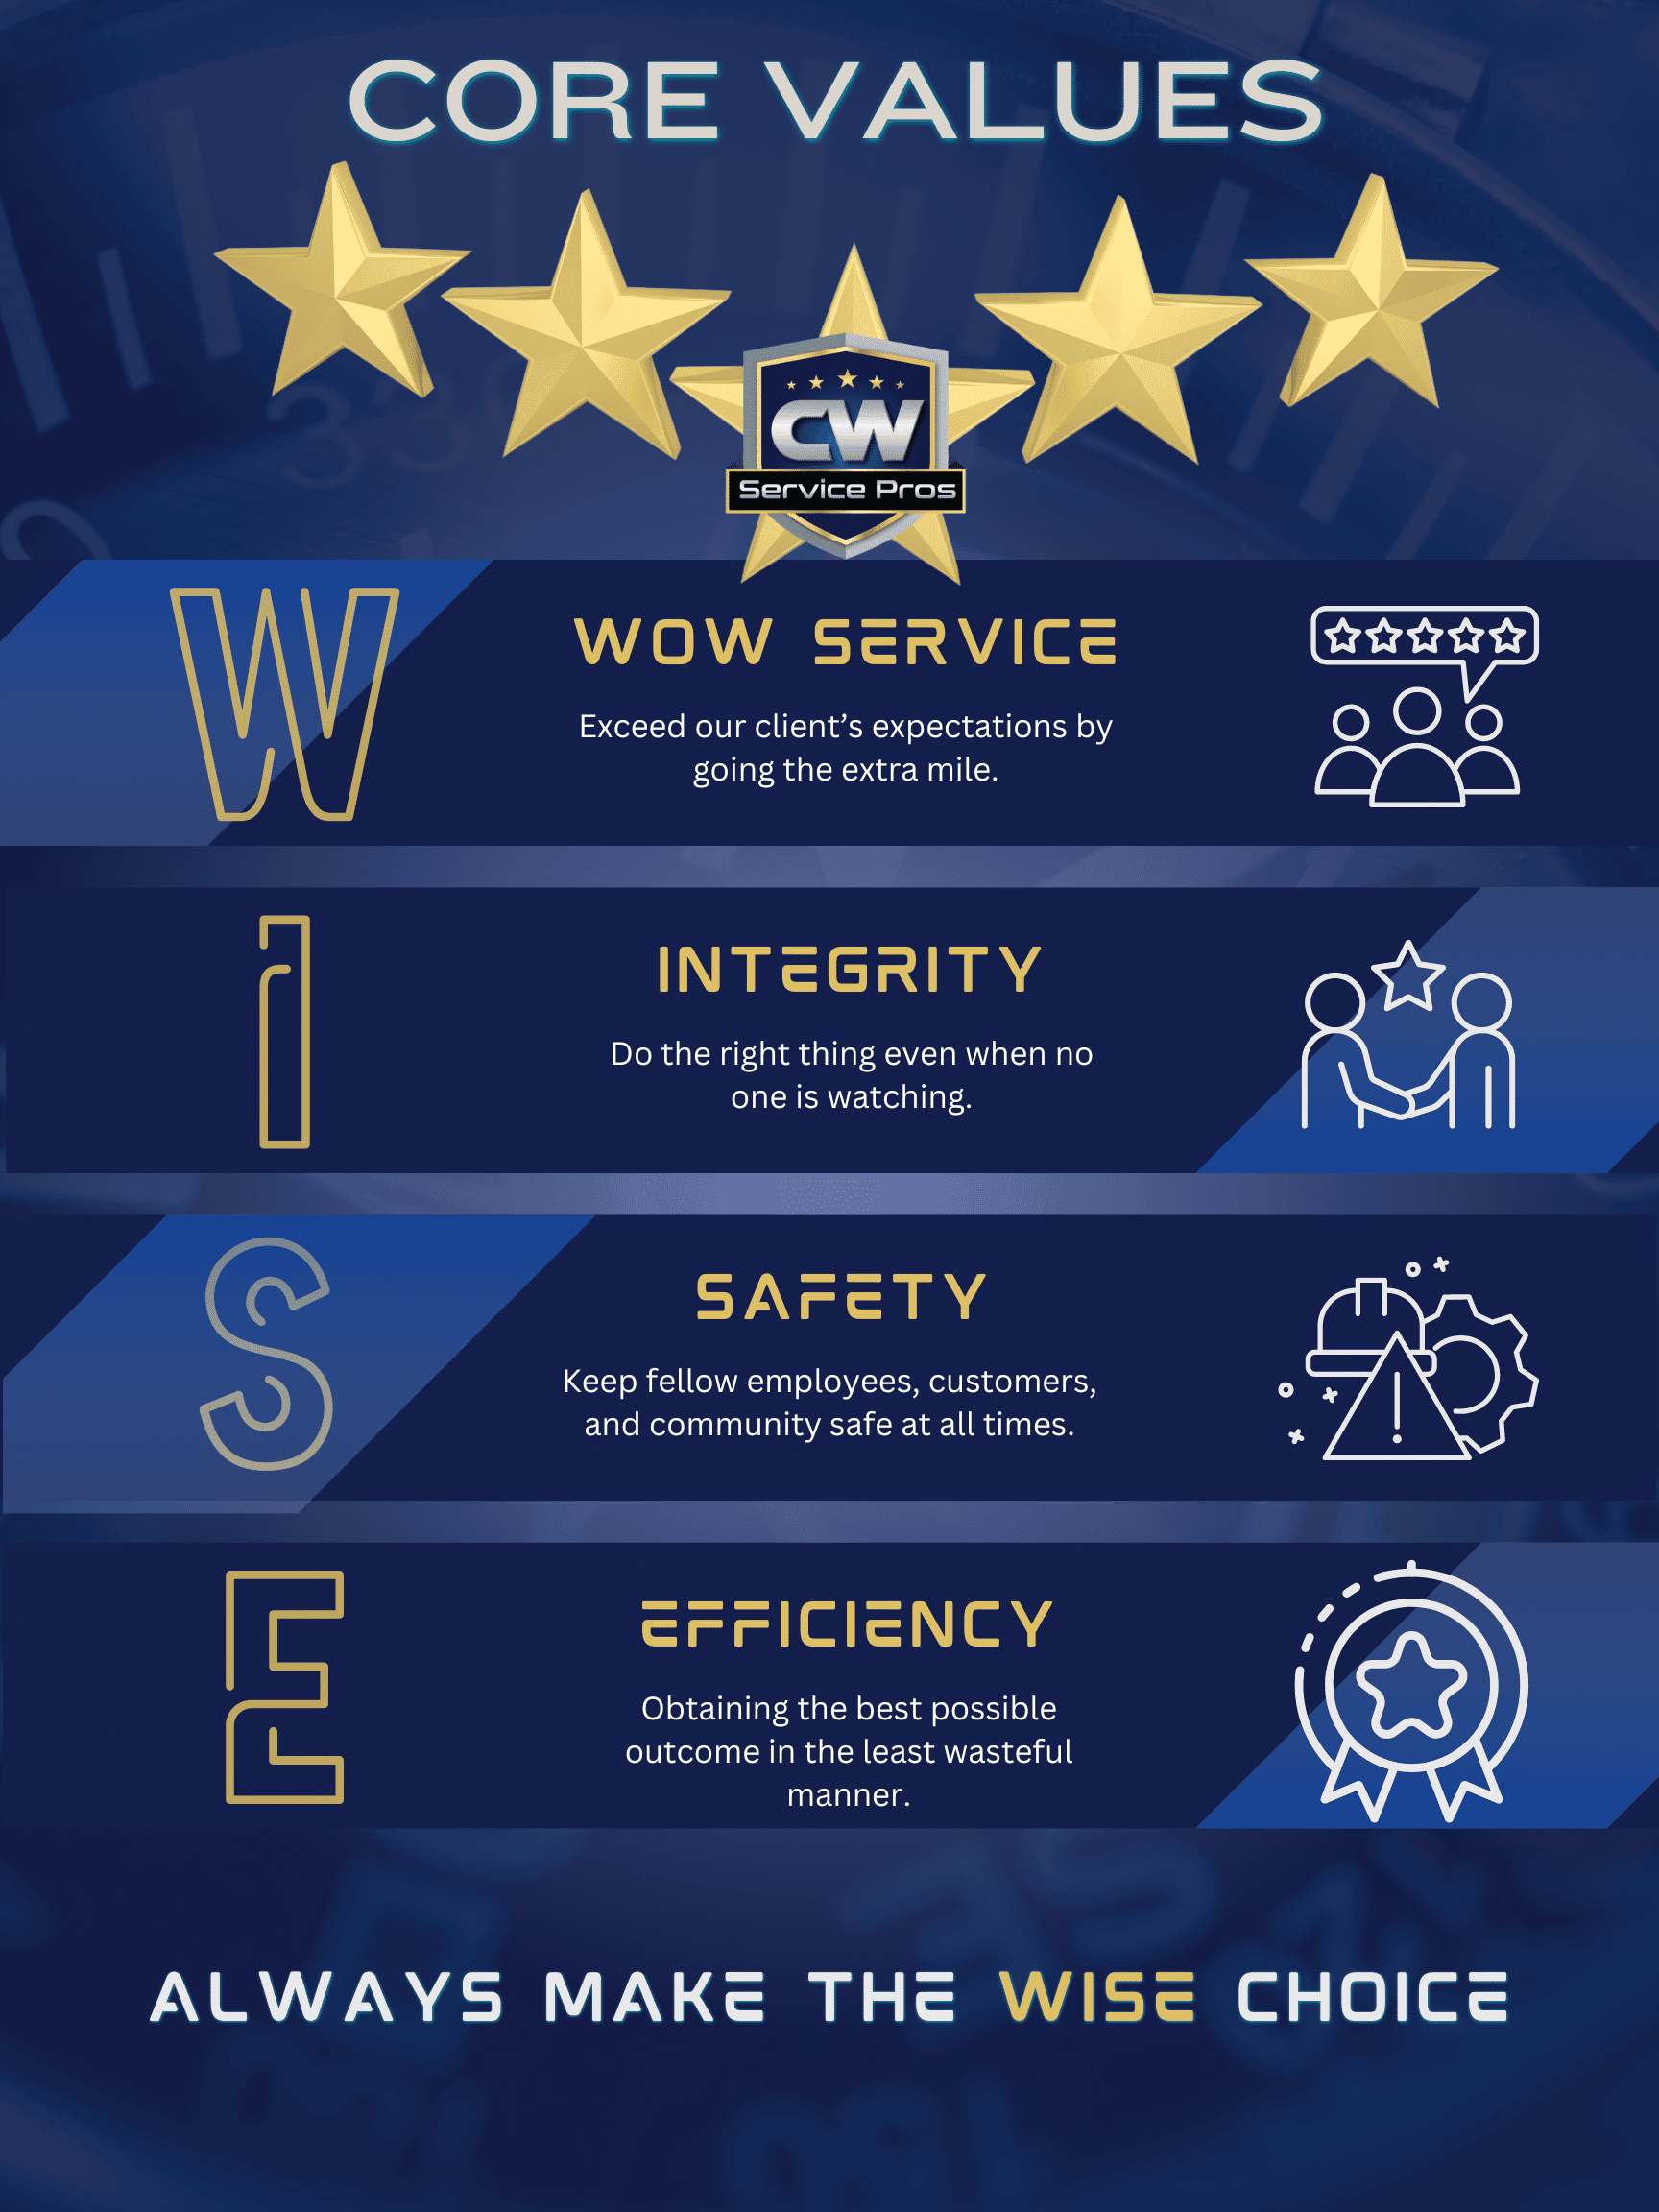 CW Service Pros Core Values